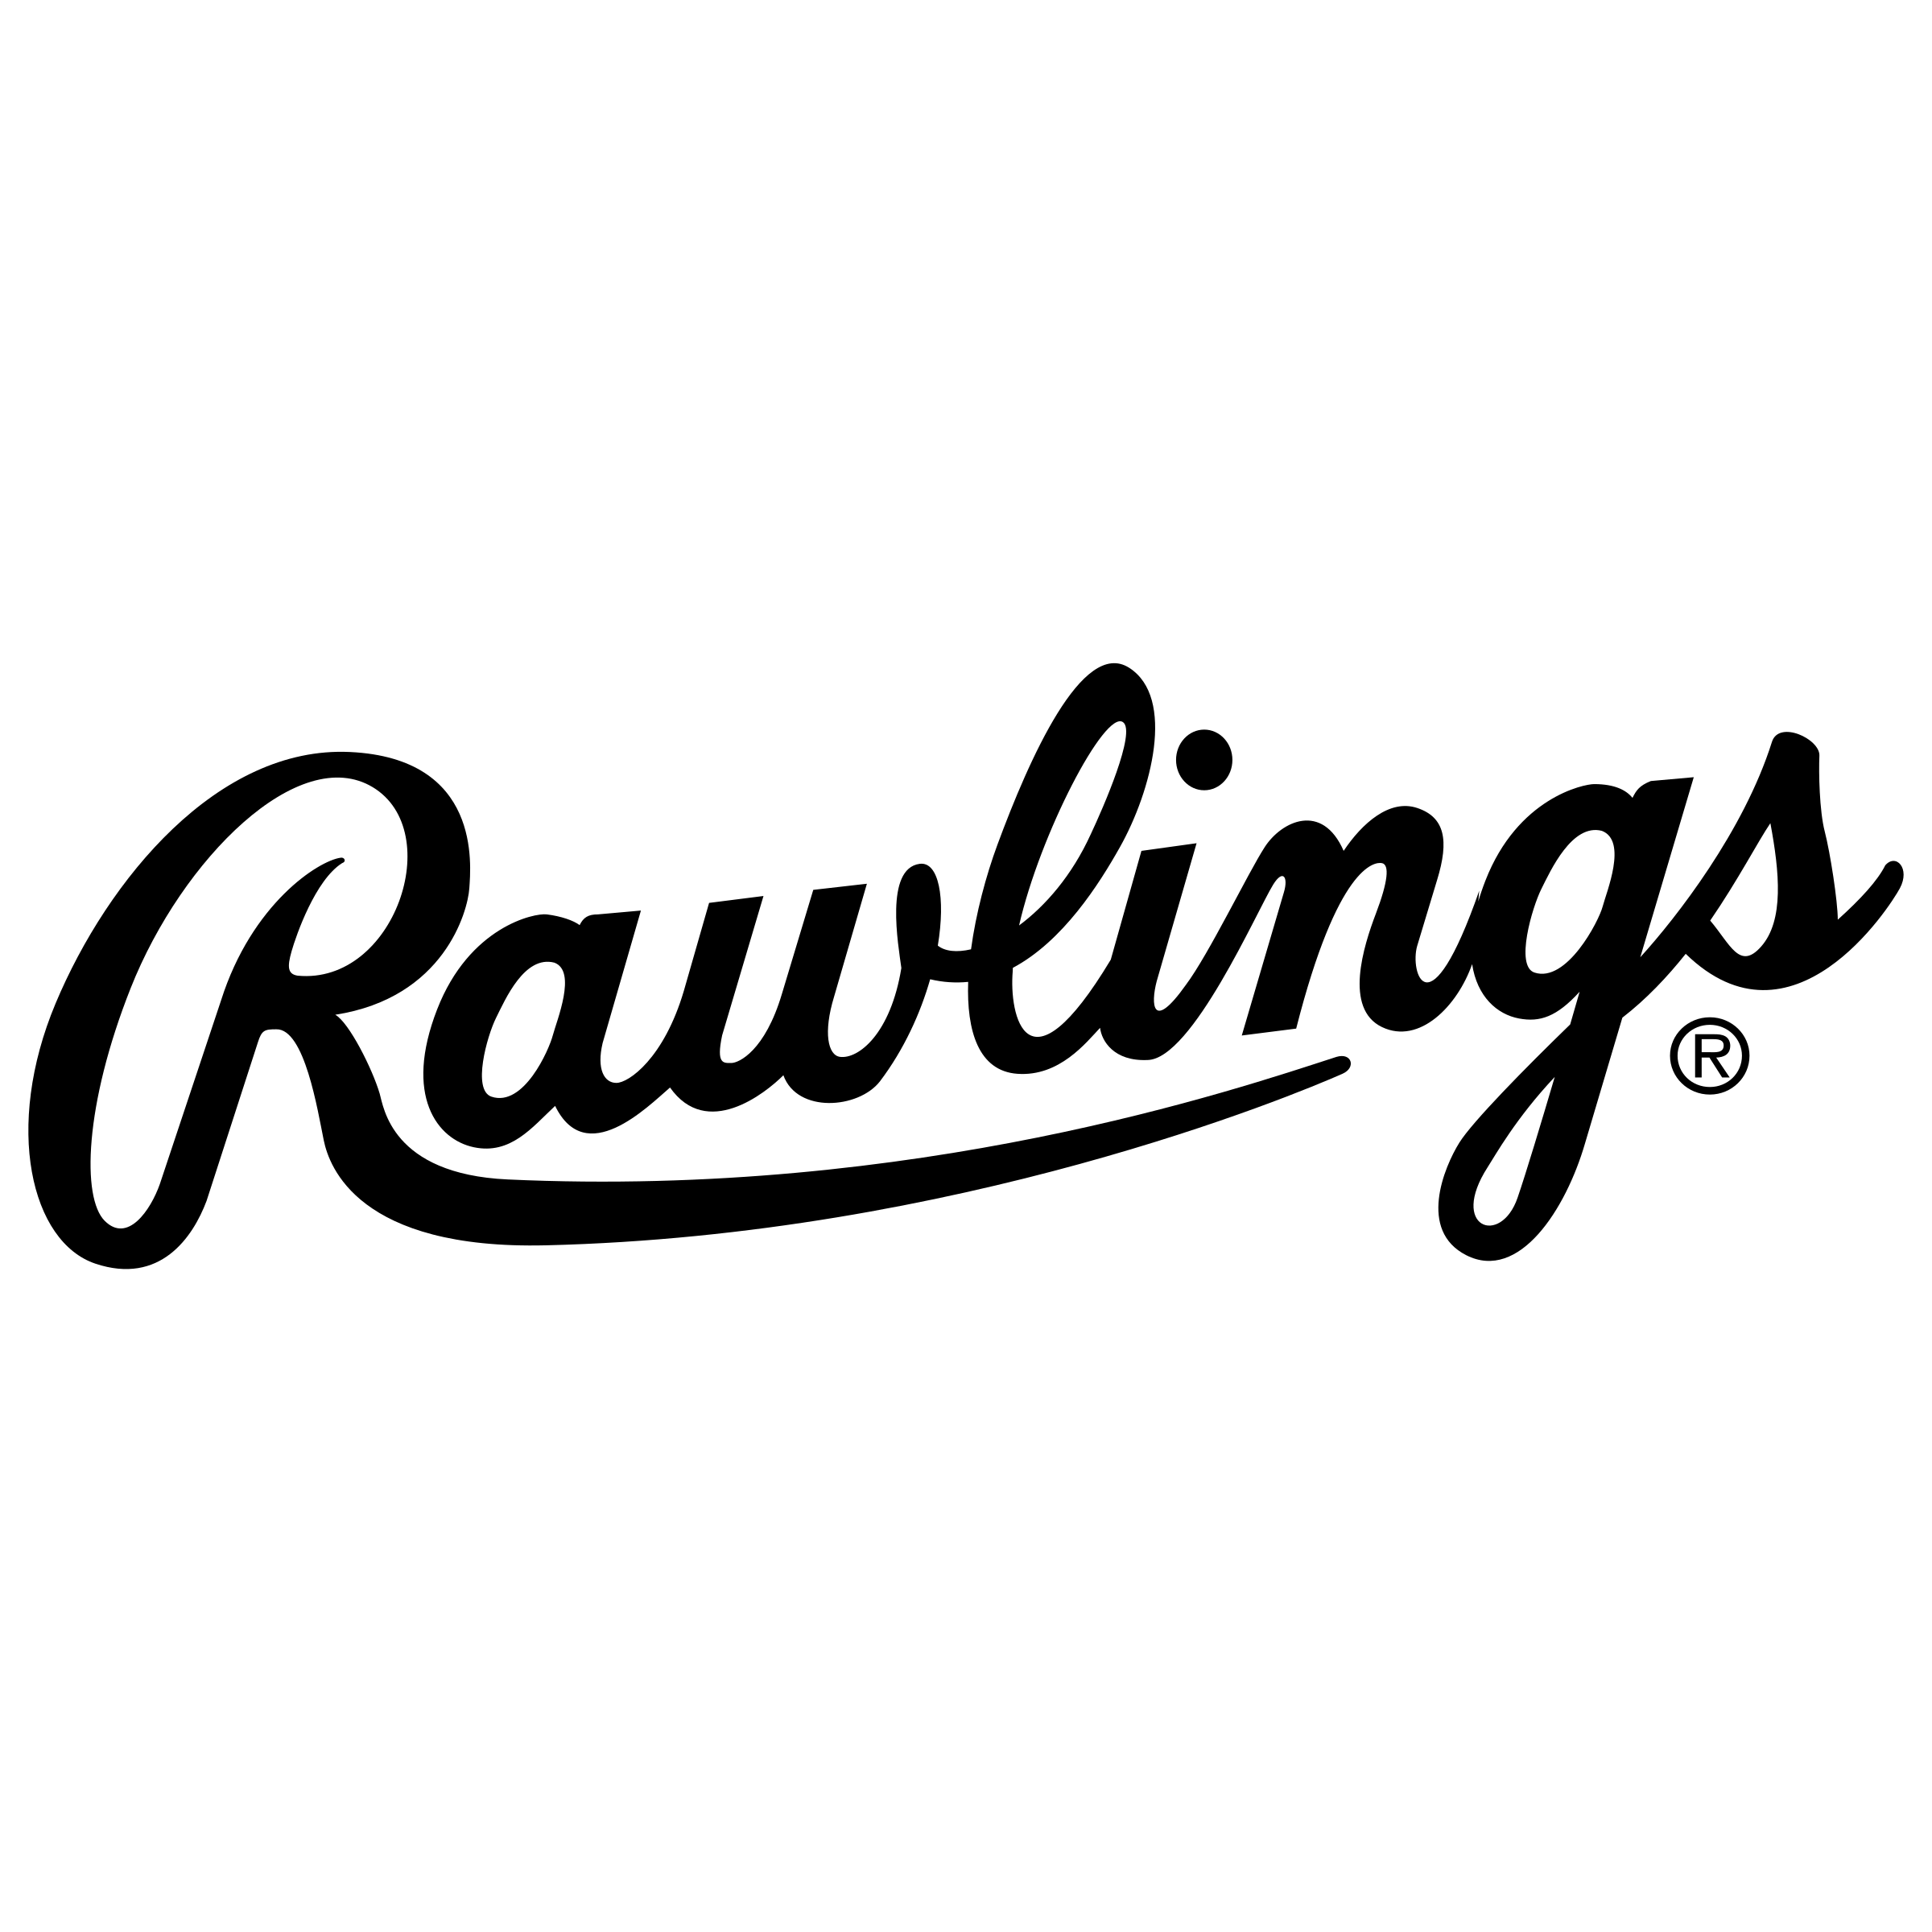 Rawlings R Logo - Rawlings Logo PNG Transparent & SVG Vector